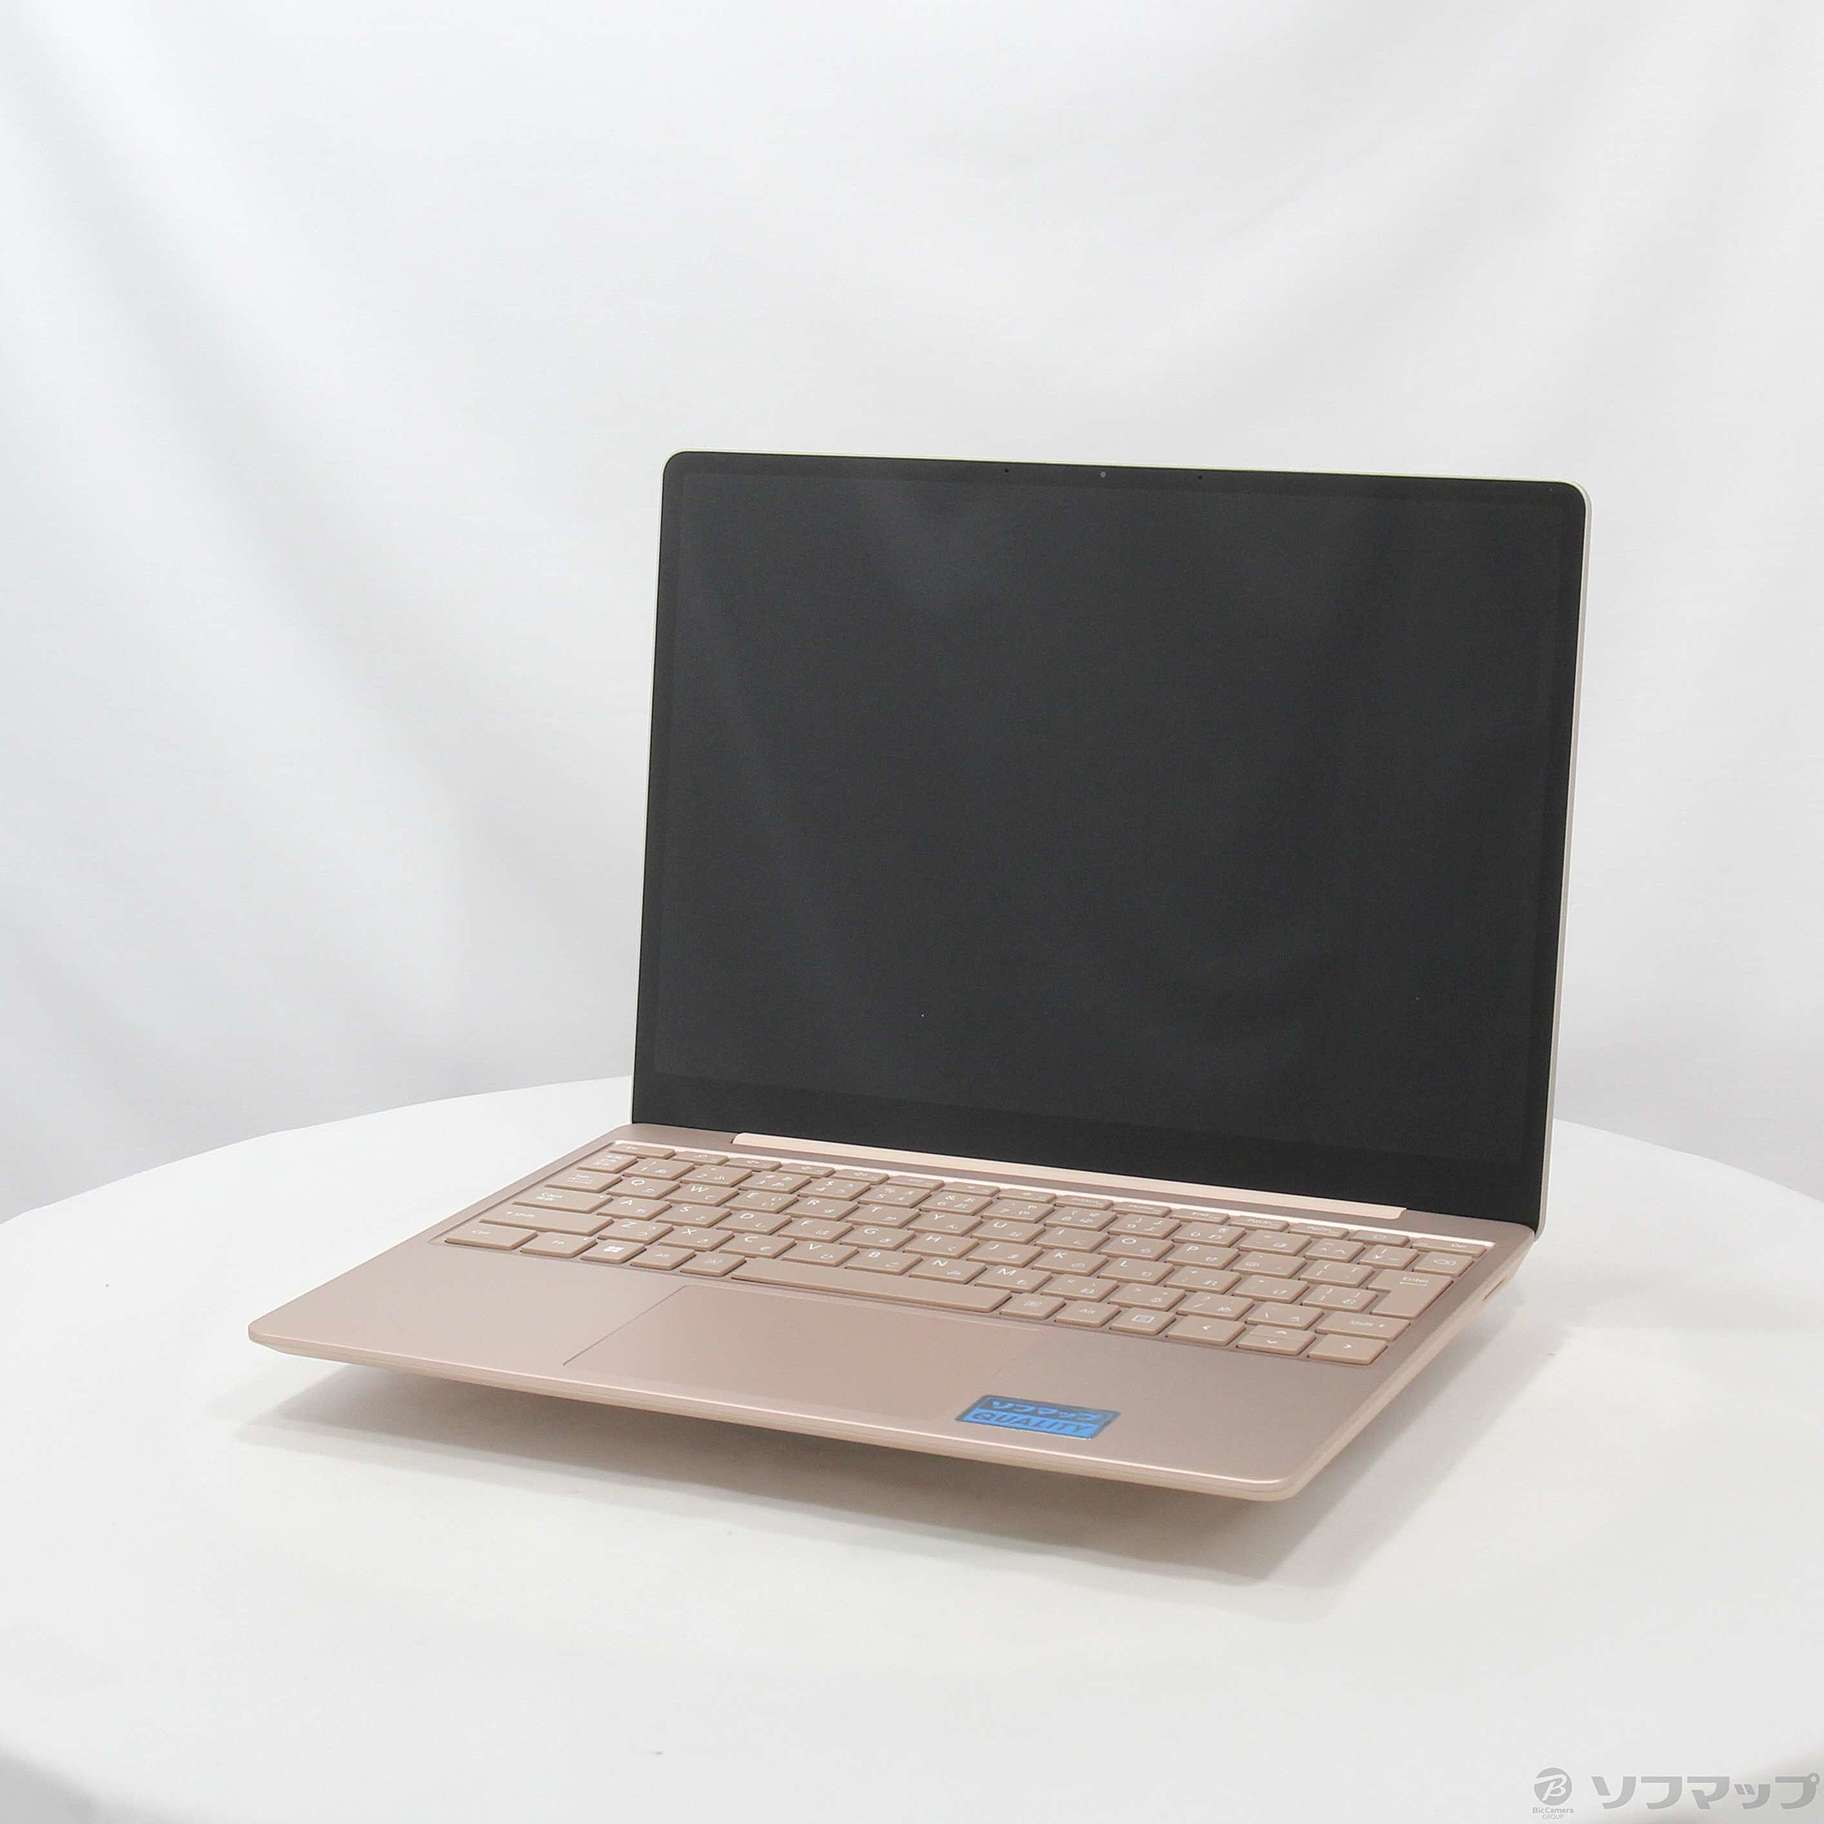 Surface Laptop Go 2 〔Core i5／8GB／SSD128GB〕 8QC-00054 サンドストーン